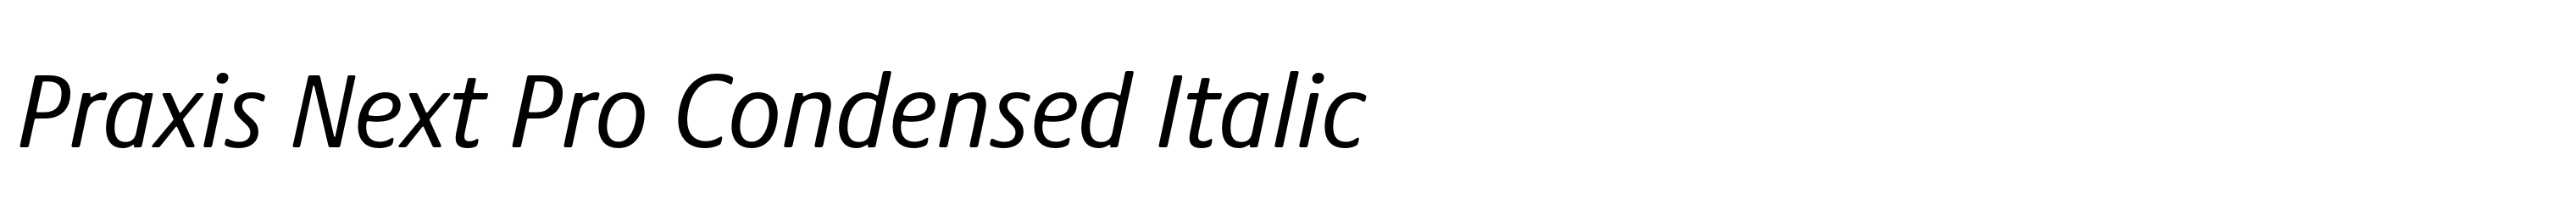 Praxis Next Pro Condensed Italic